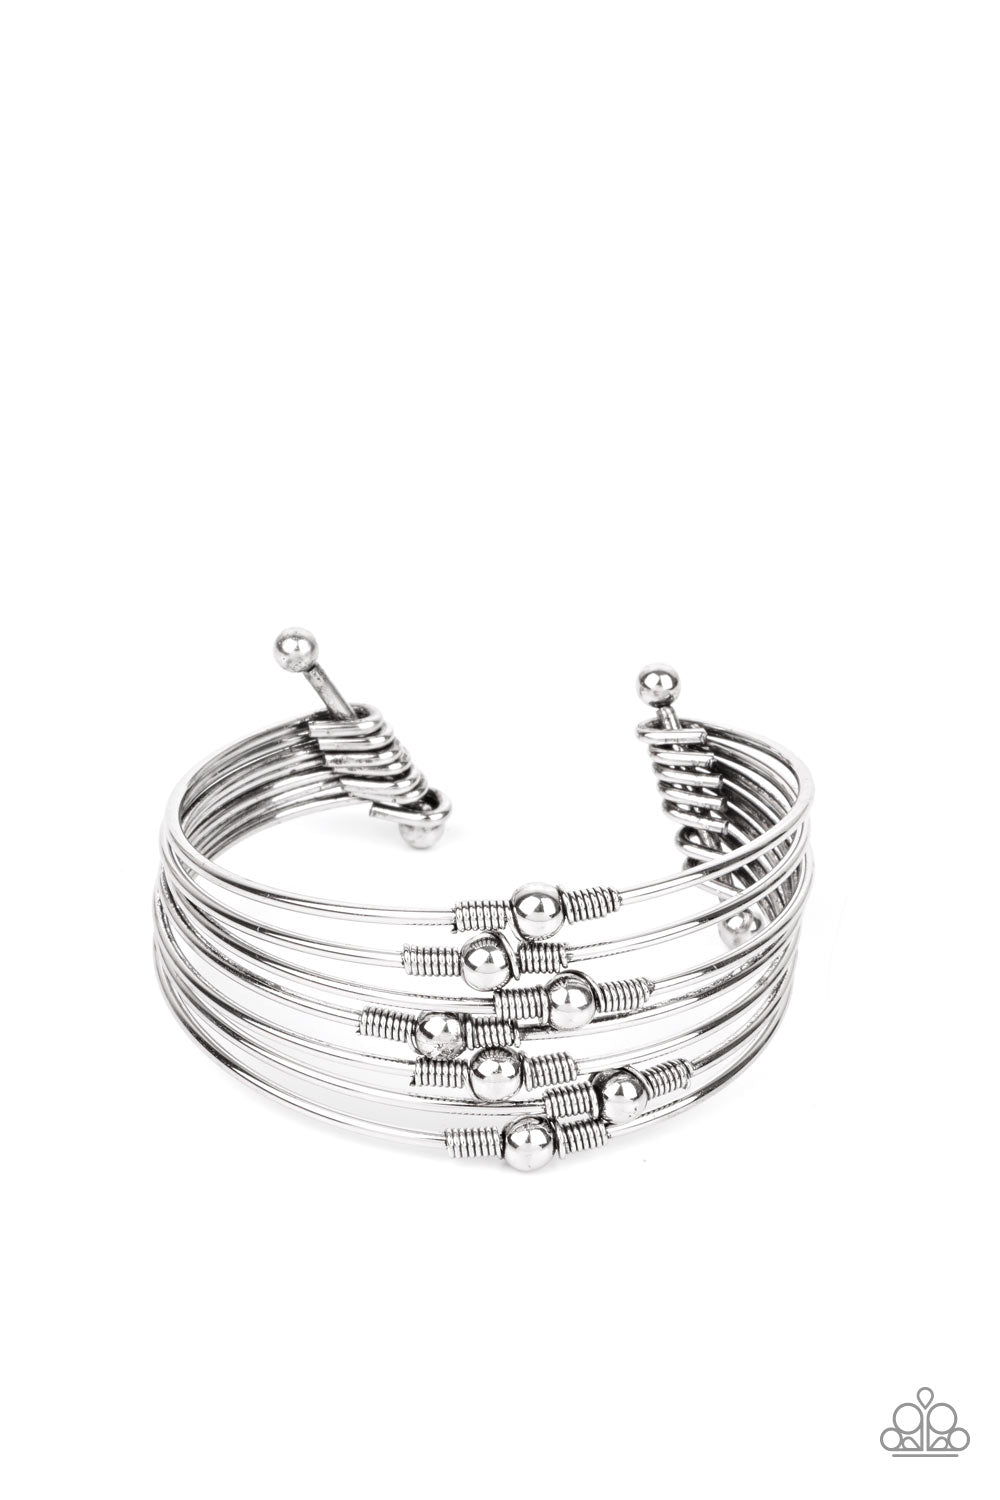 Industrial Intricacies - Silver Cuff Bracelet - Princess Glam Shop